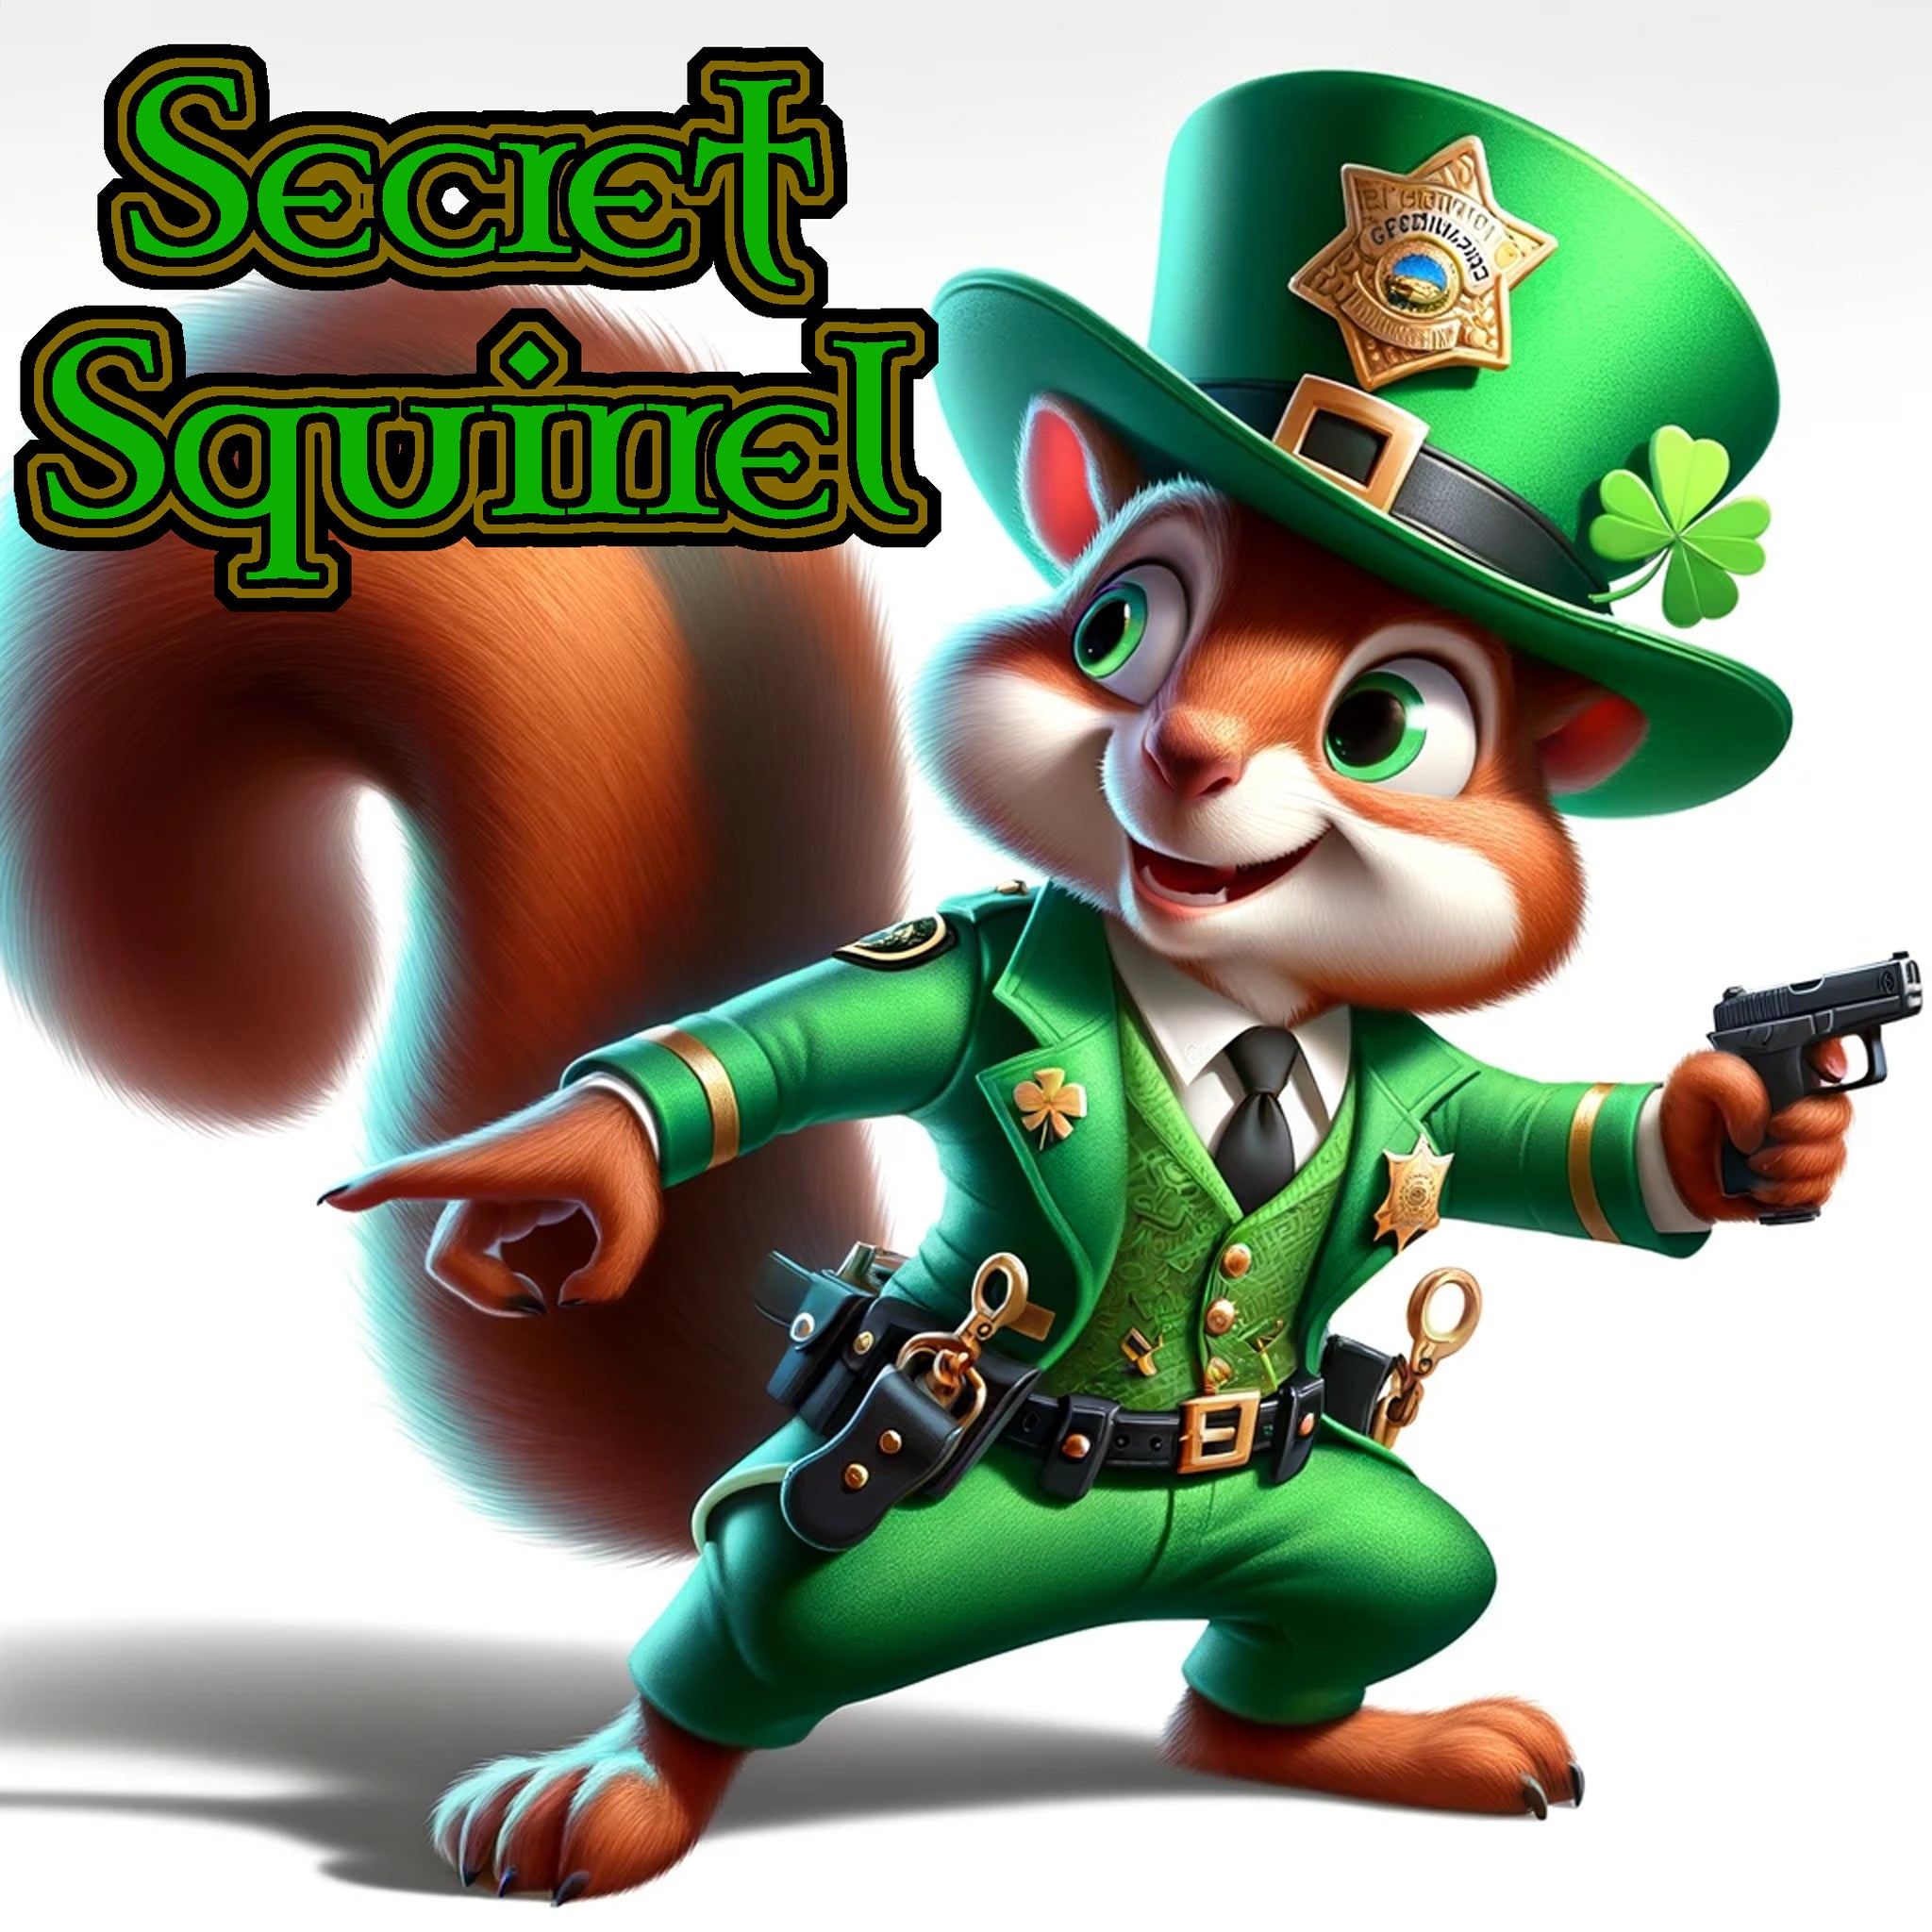 Irish Arizona PD Secret Squirrel Patch (NOT THE PHOTO SHOWN)